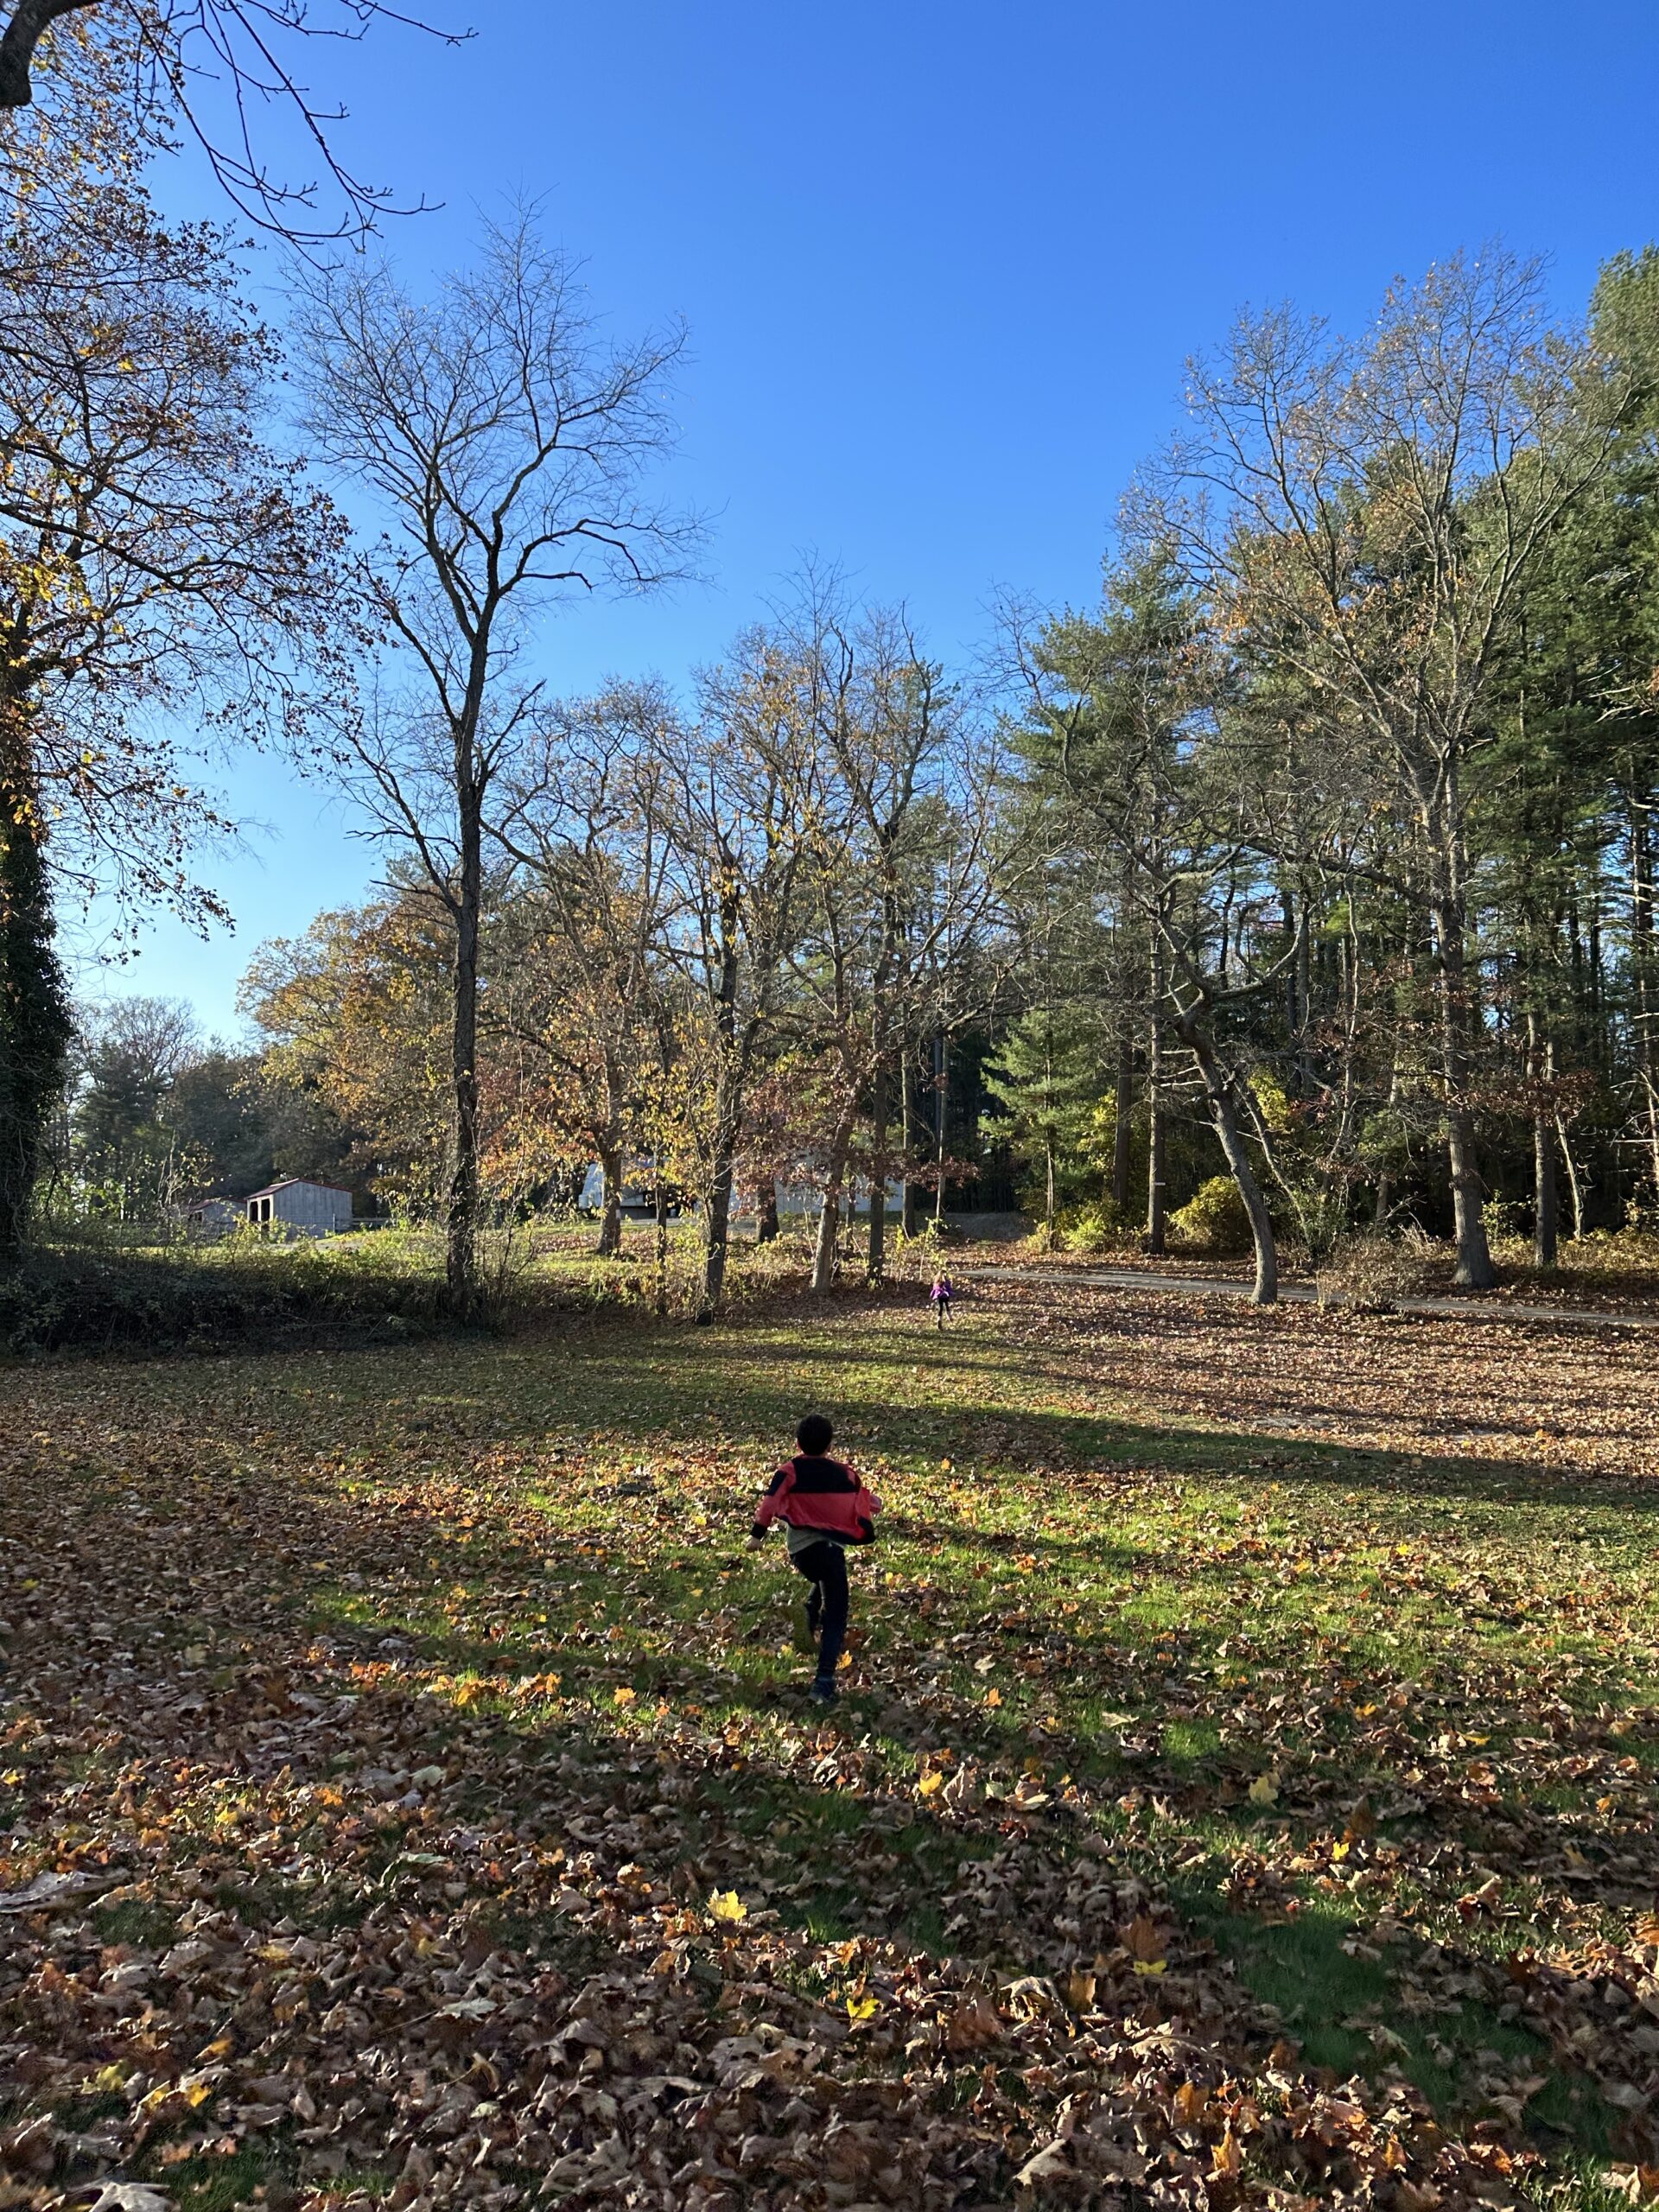 Goddard Park in Warwick, Rhode Island with kids